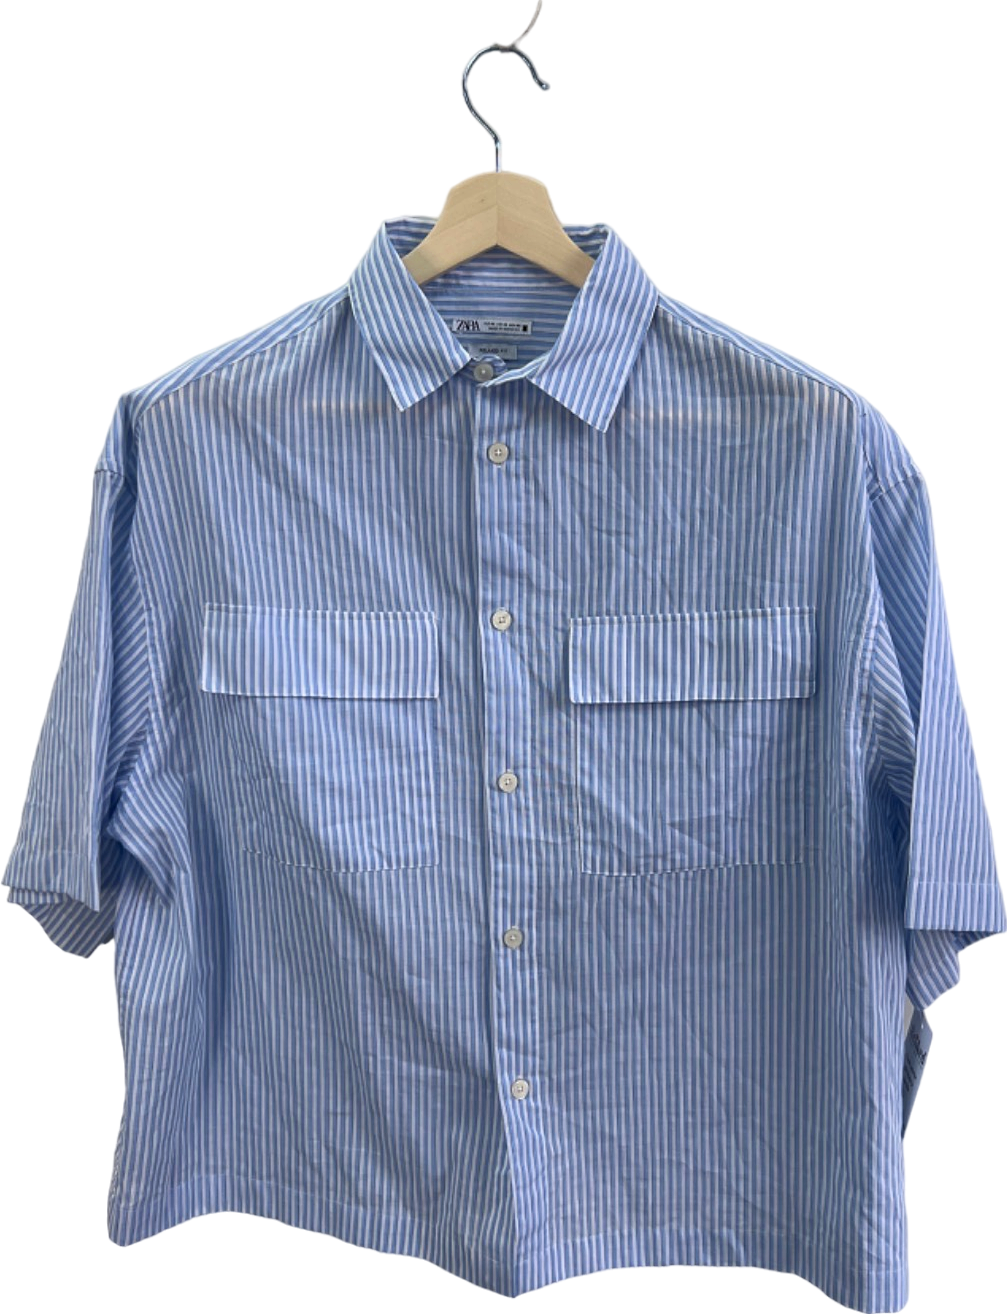 Zara Blue Striped Short Sleeve Shirt Relaxed Fit Medium